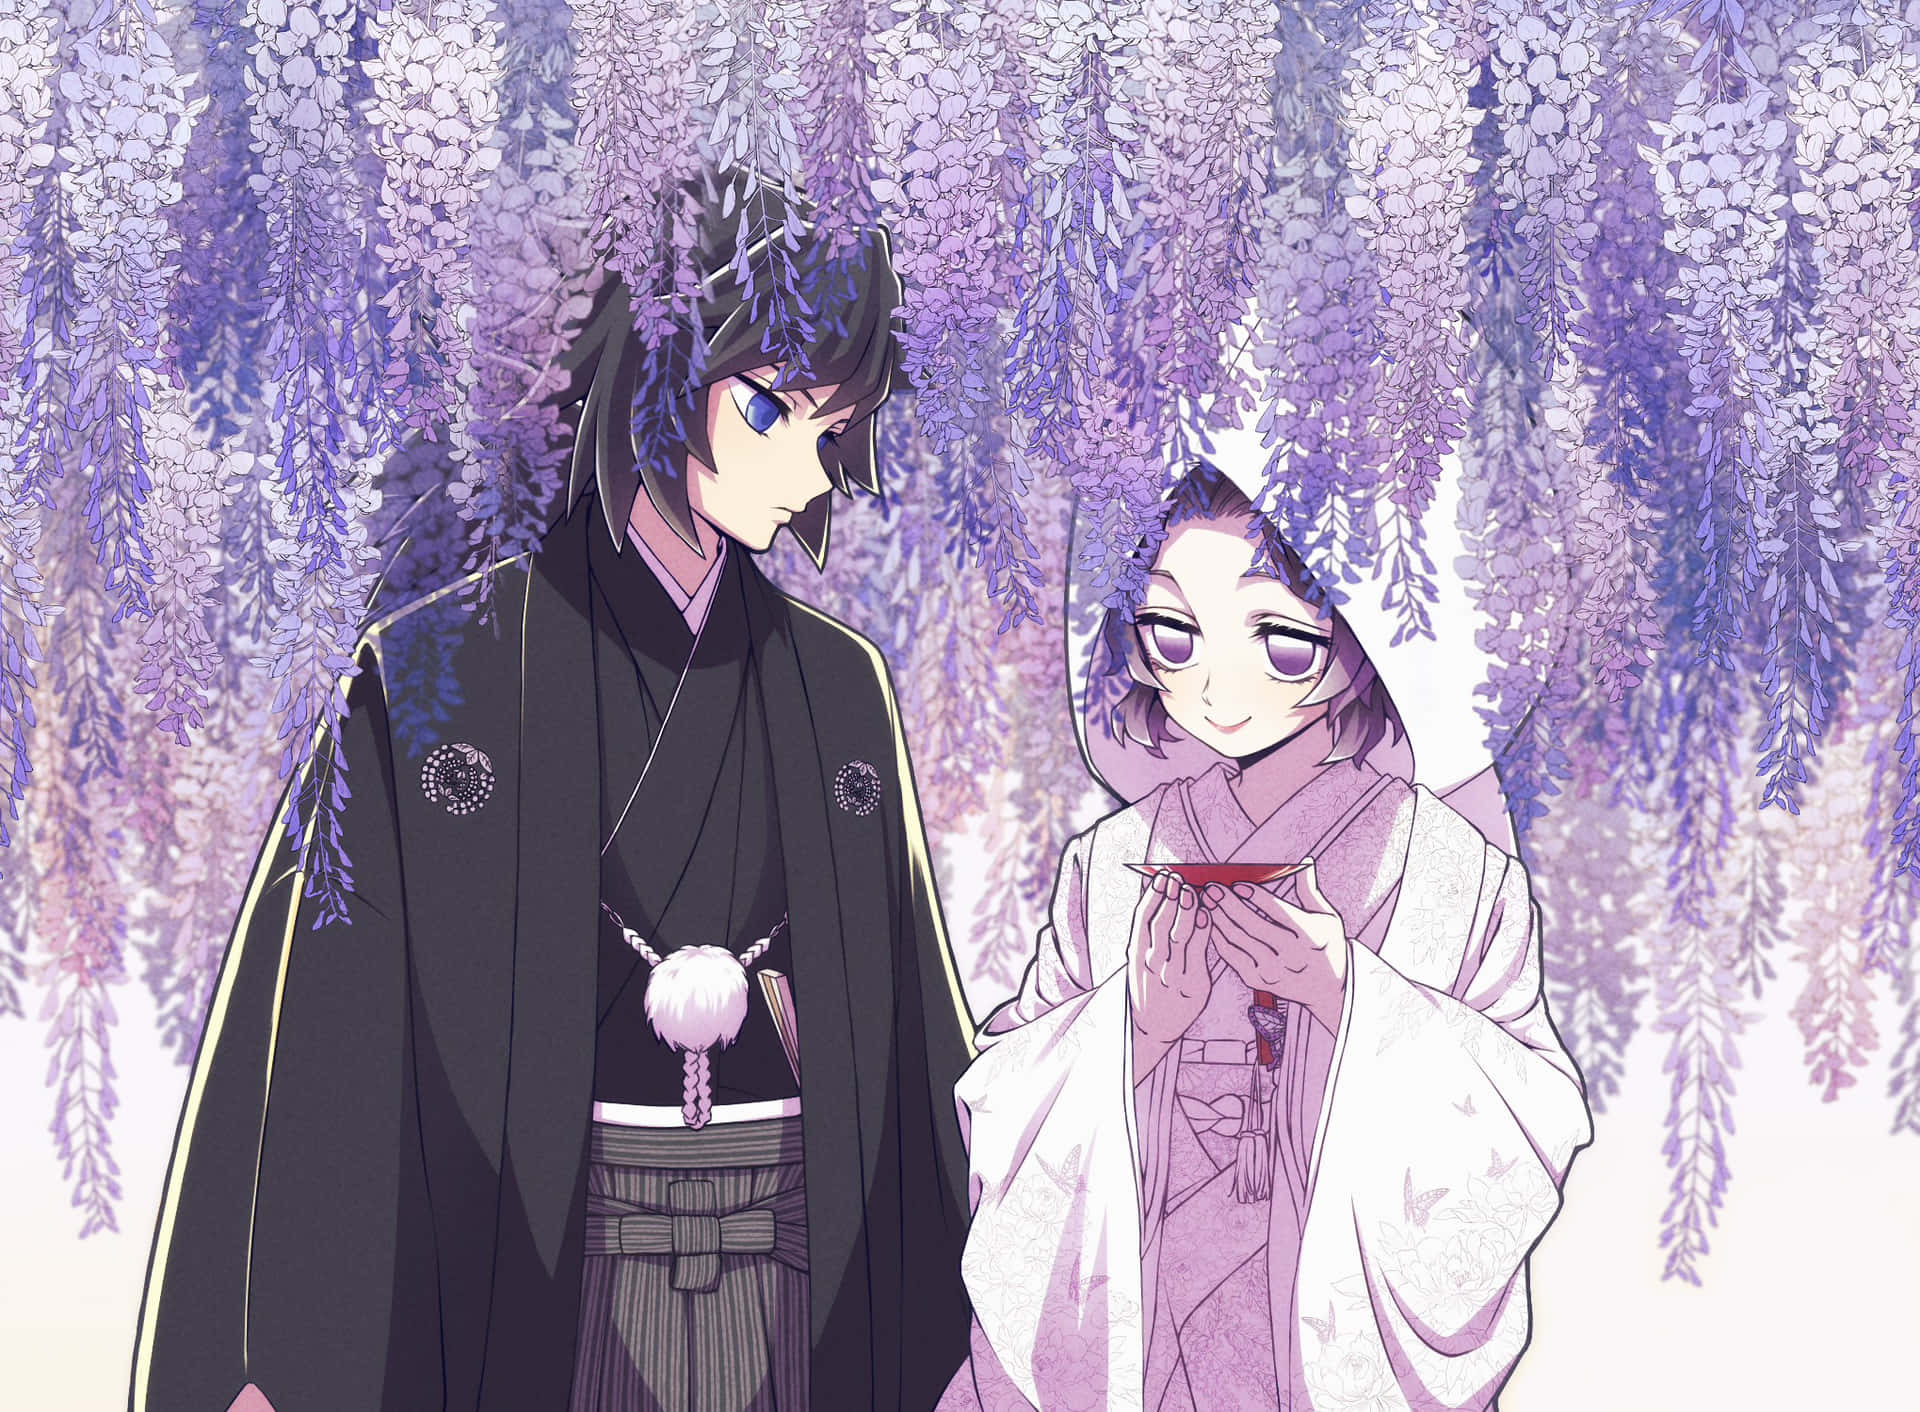 Anime Aesthetic Couple In Kimono Ps4 Wallpaper